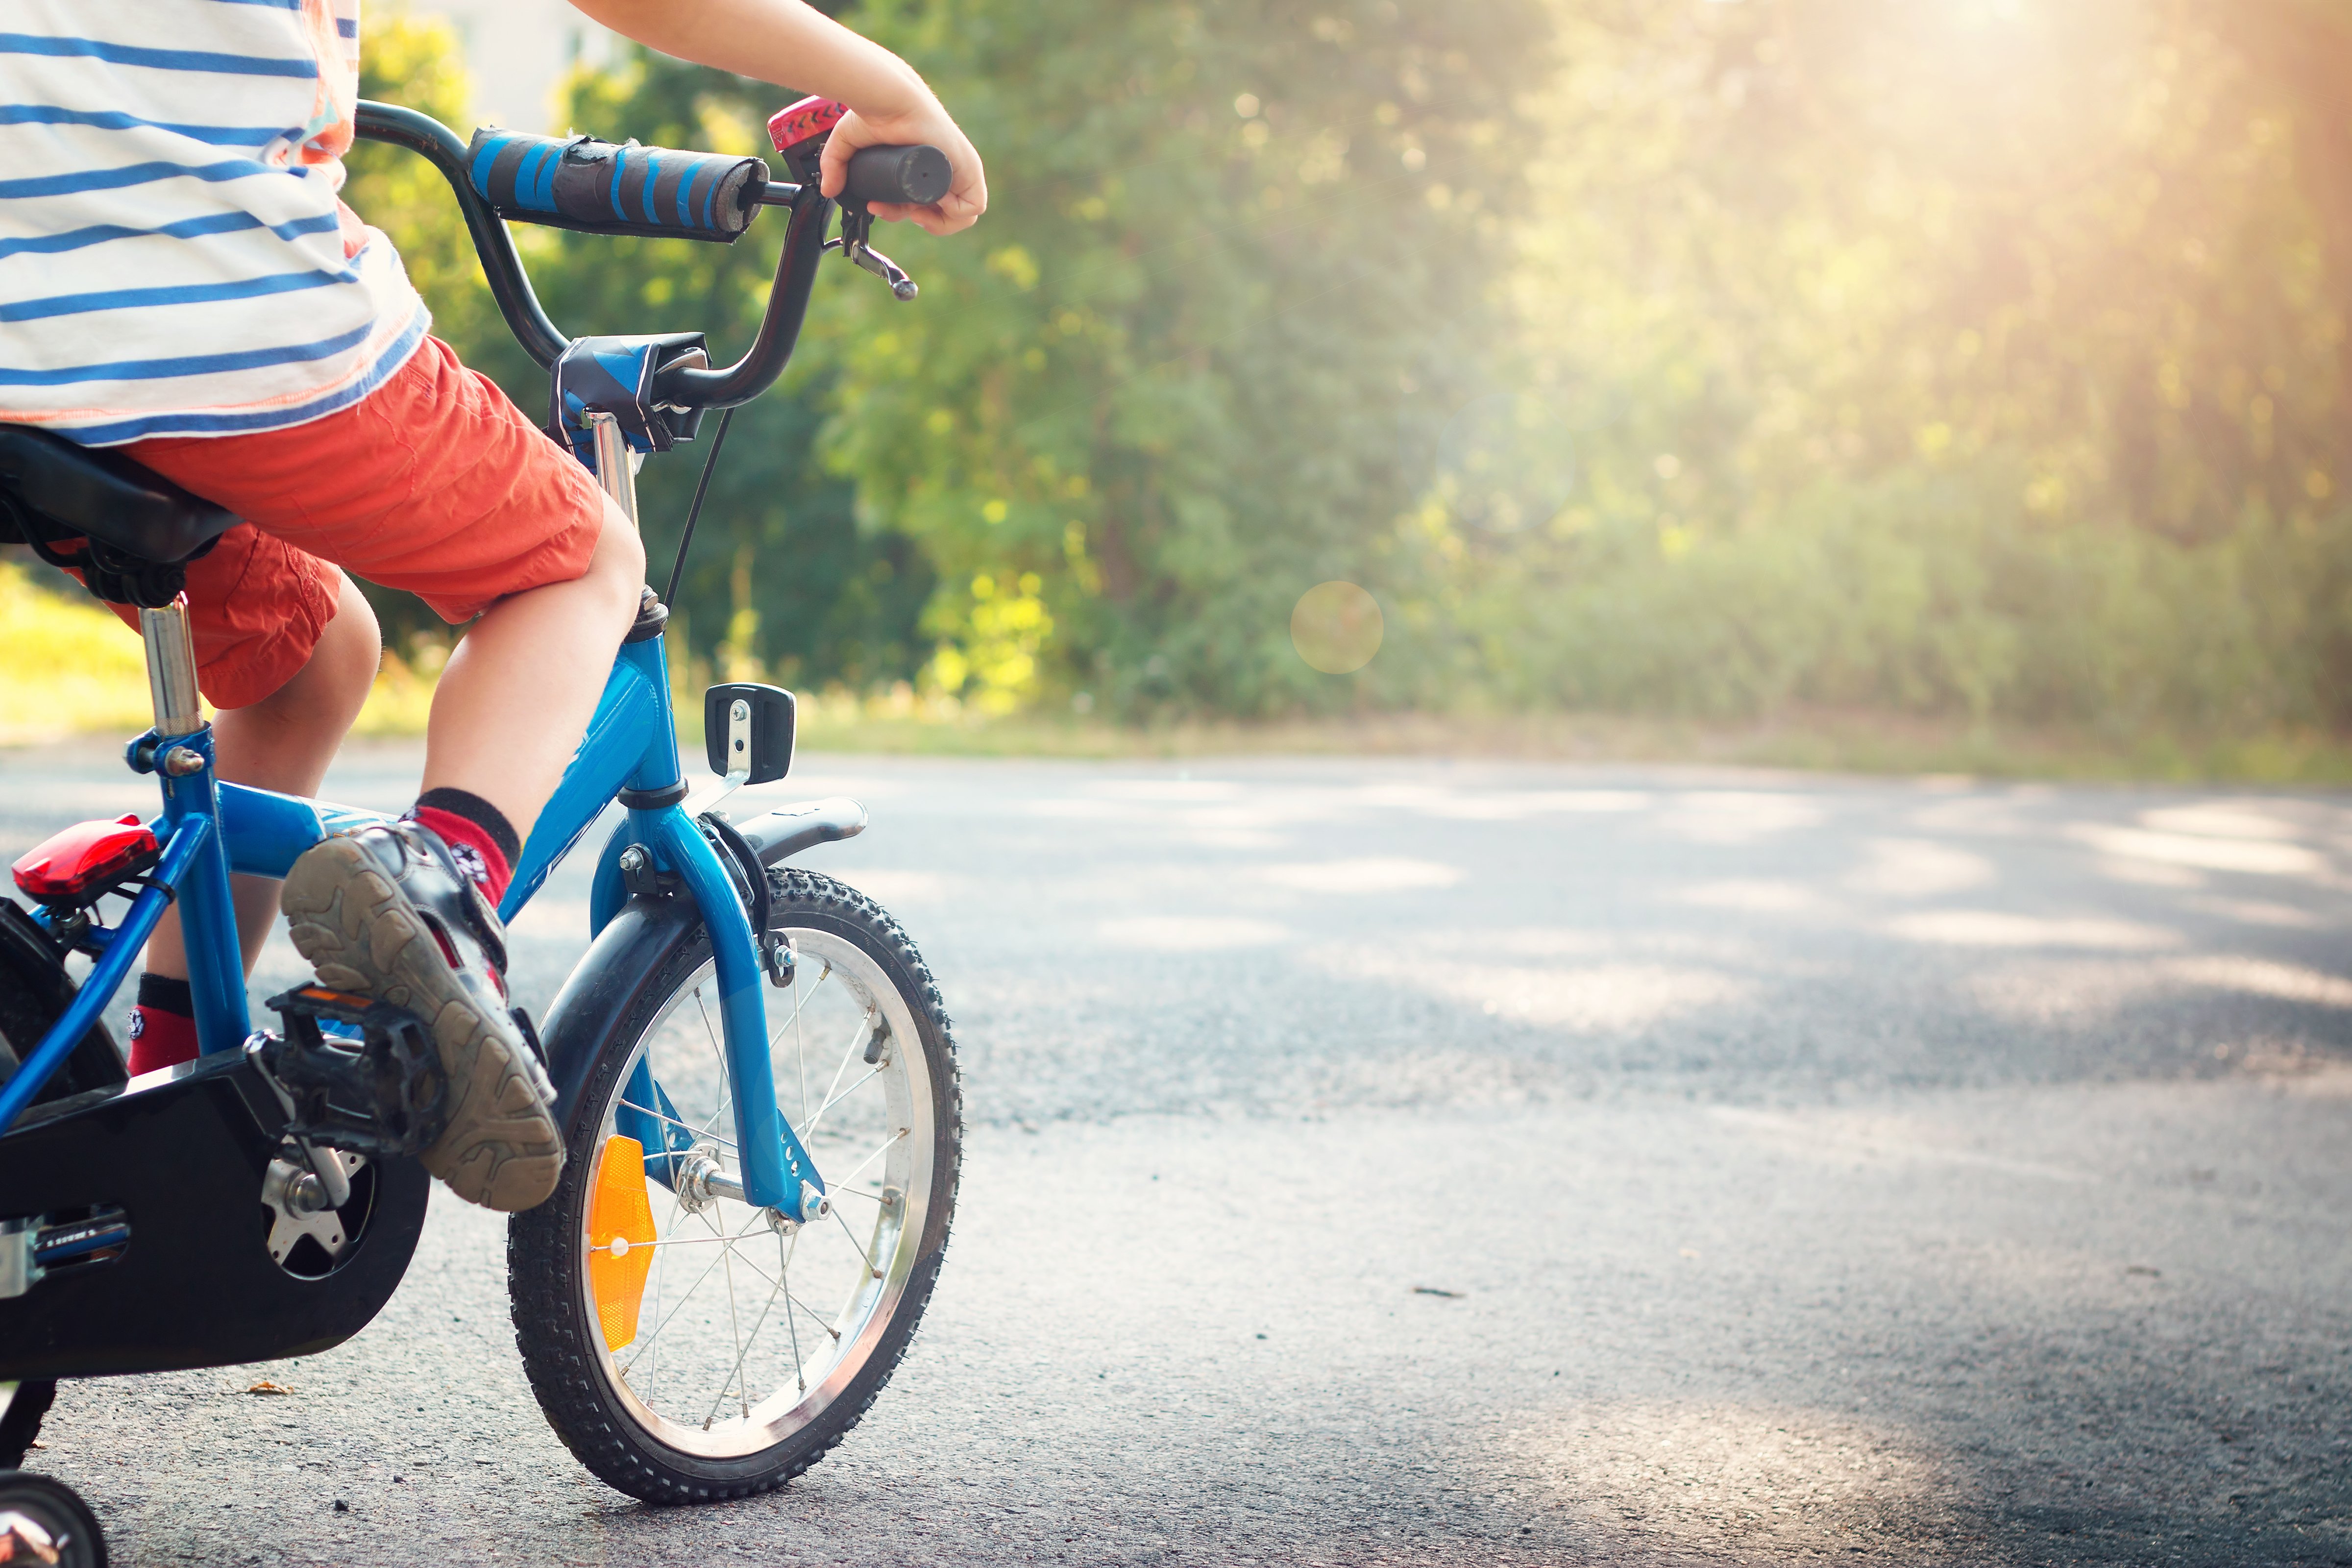 Niño manejando una bici. Fuente: Shutterstock